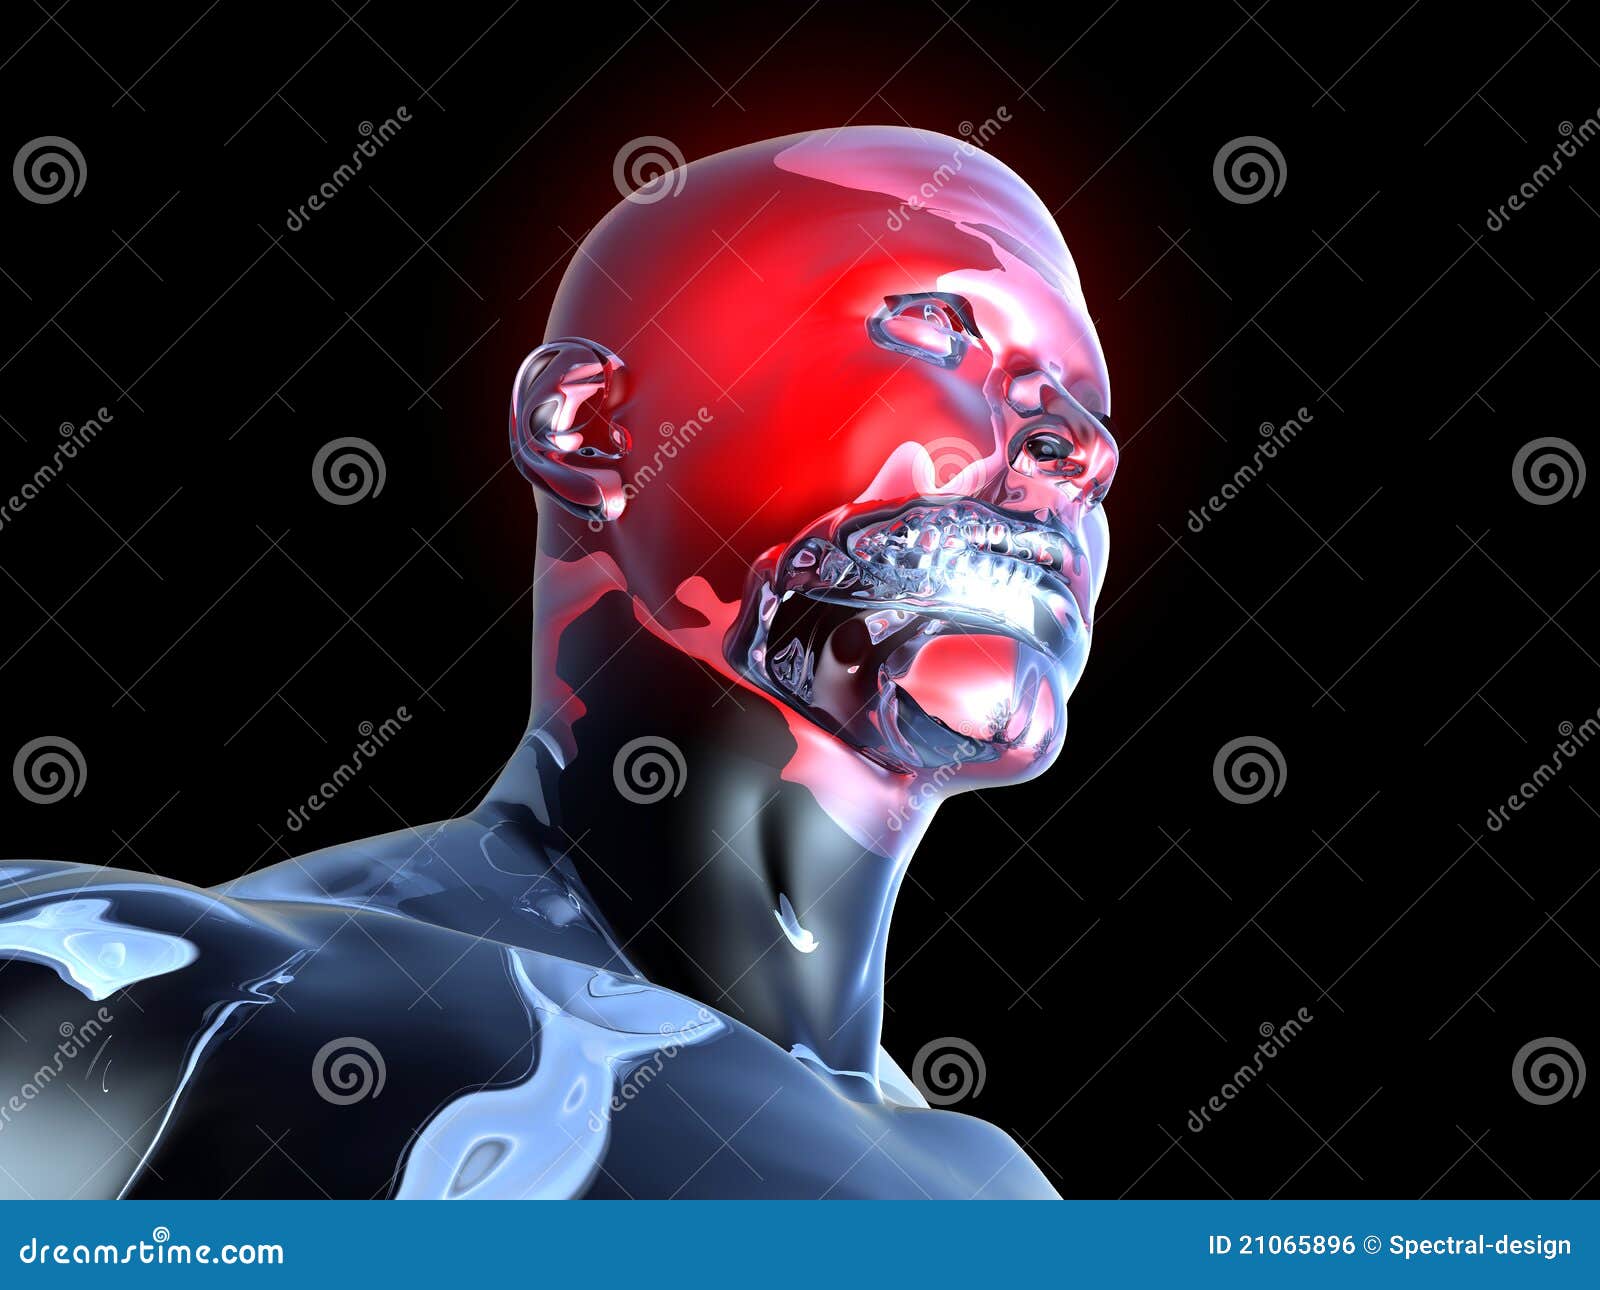 Headache - Anatomy Royalty Free Stock Image - Image: 21065896